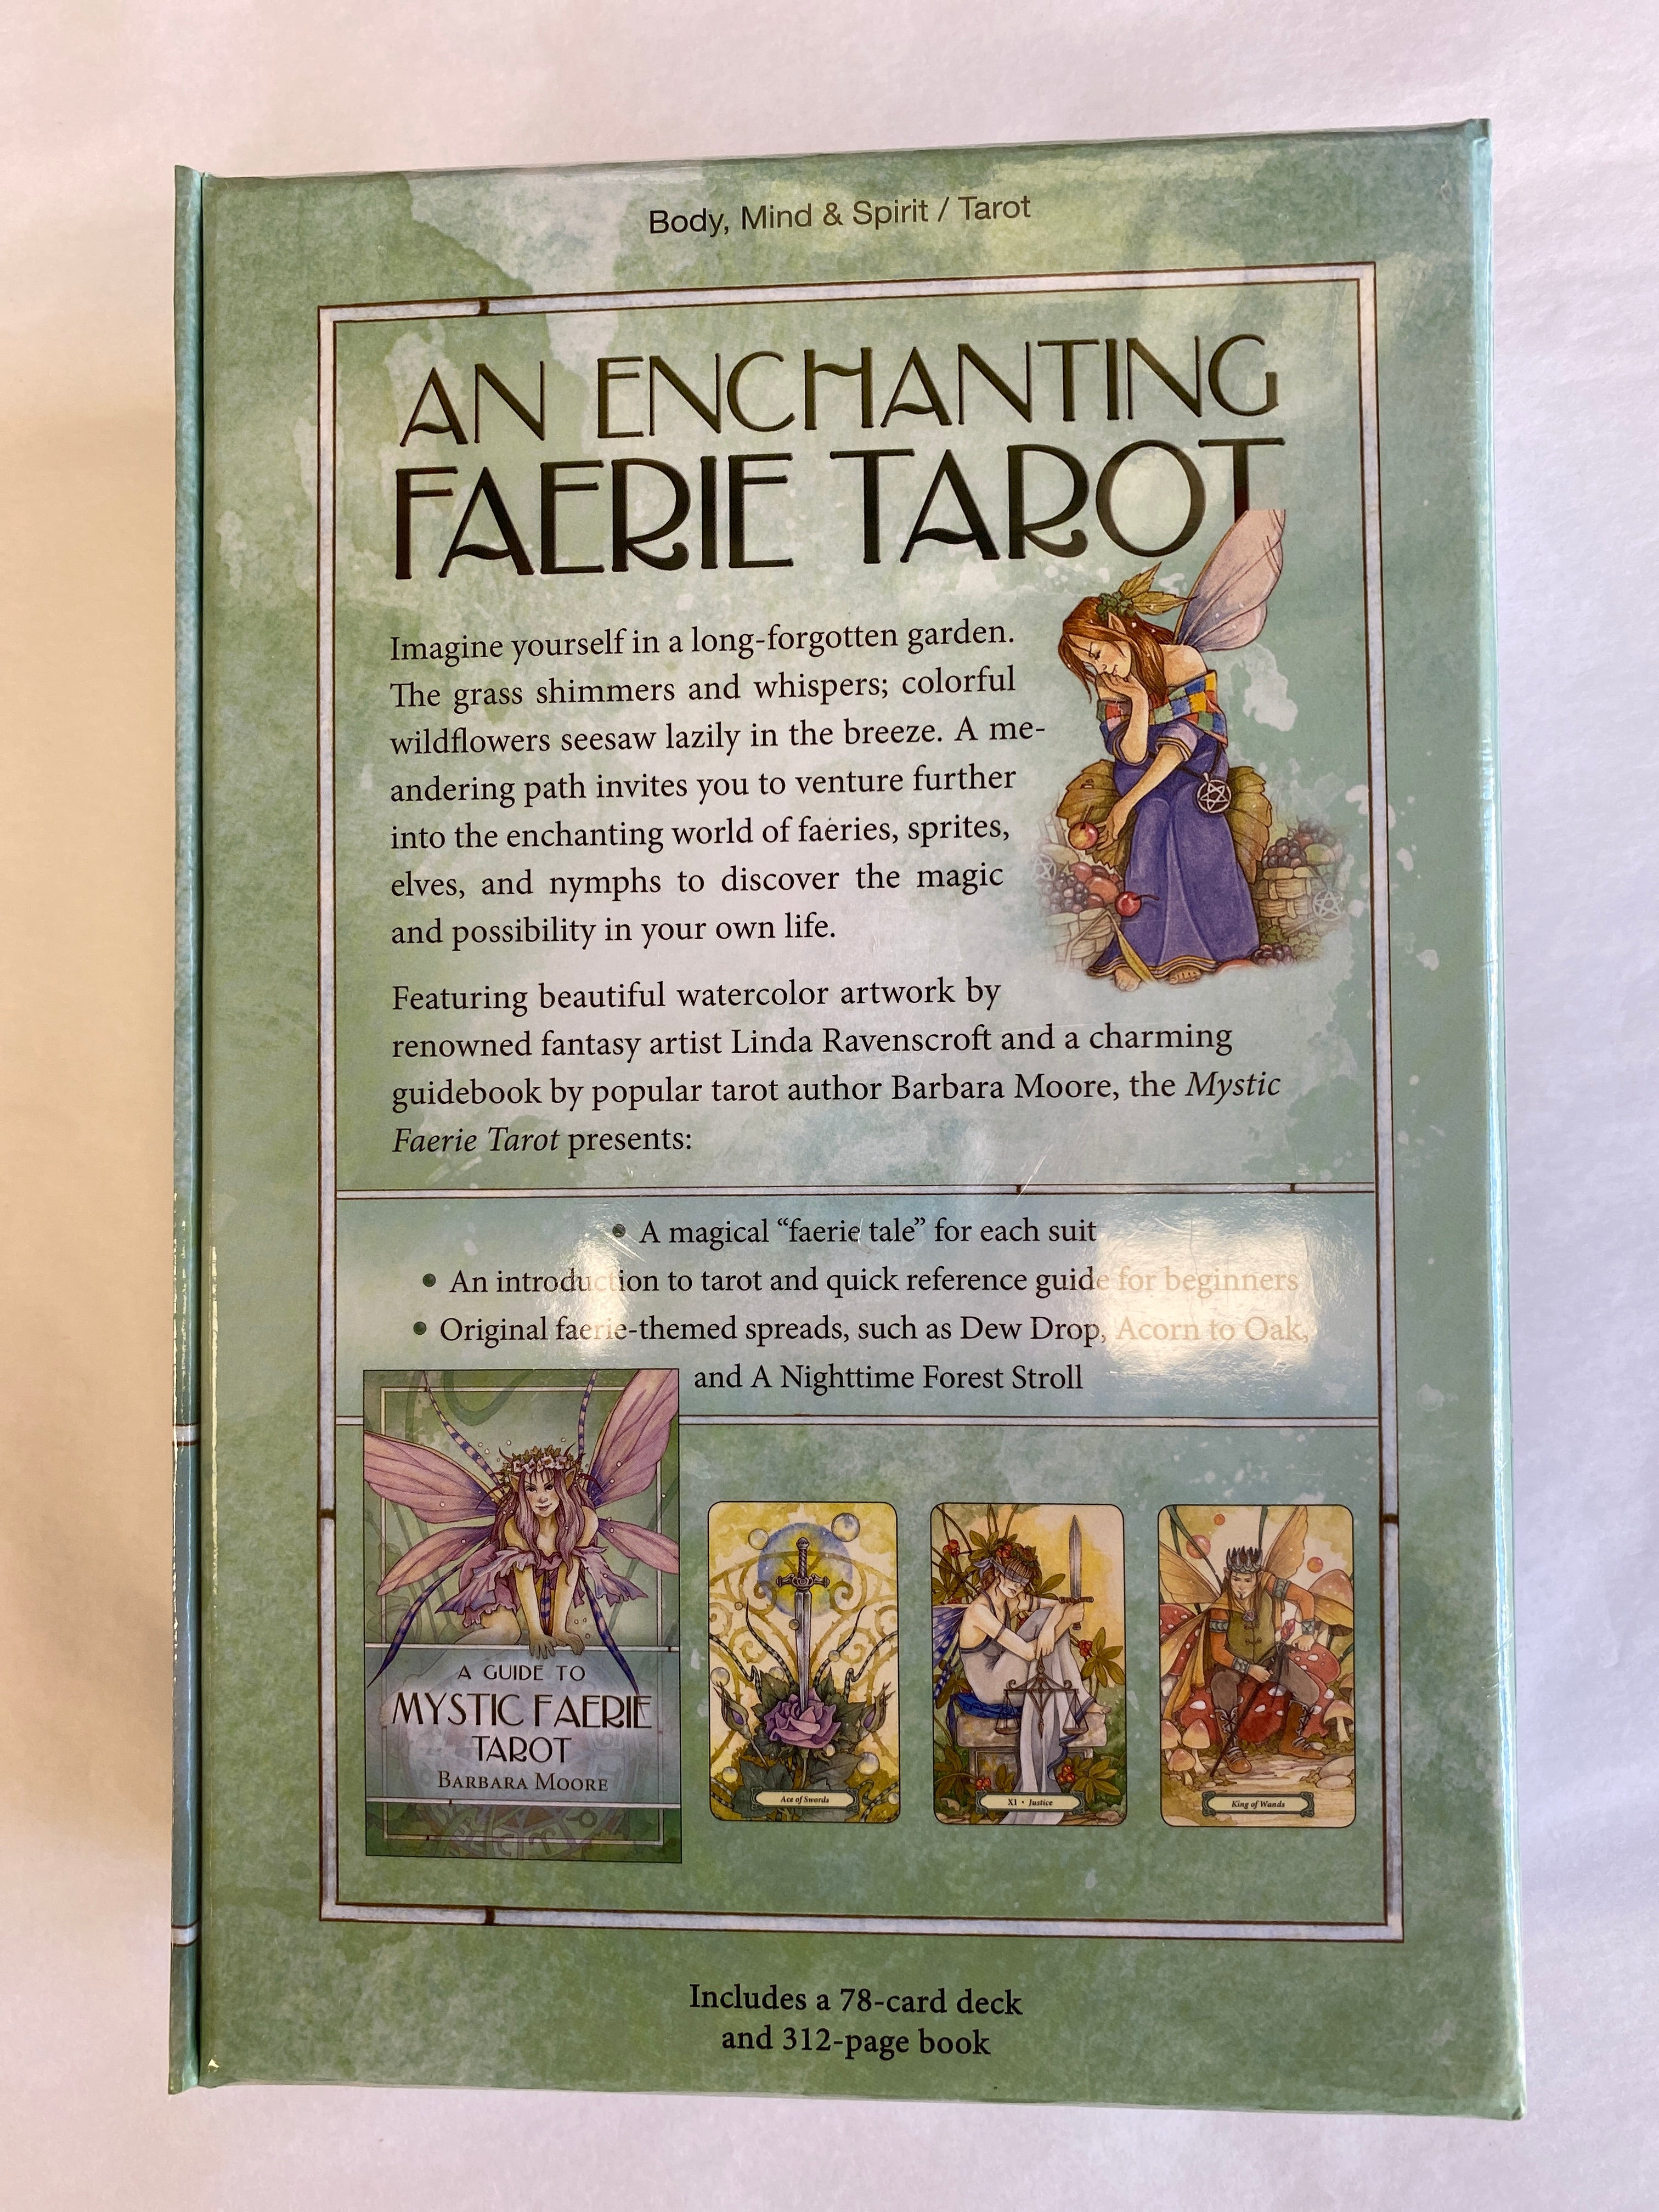 Mystic Faerie Tarot Set